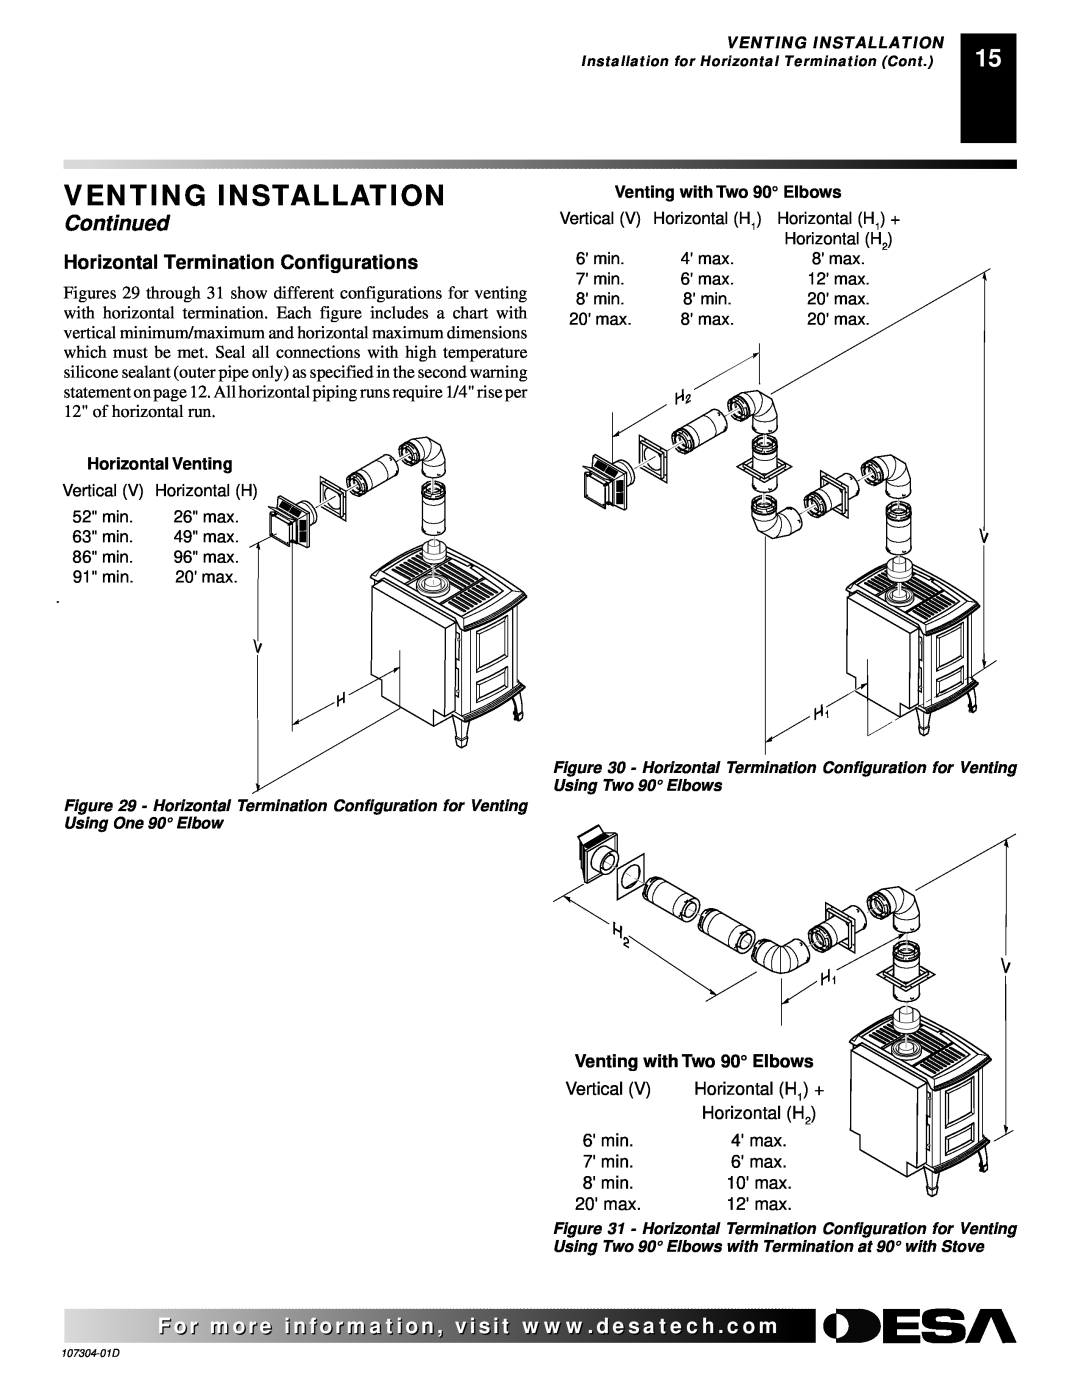 Desa SDVBNC, SDVBPC Venting Installation, Continued, Horizontal Termination Configurations, Horizontal Venting 